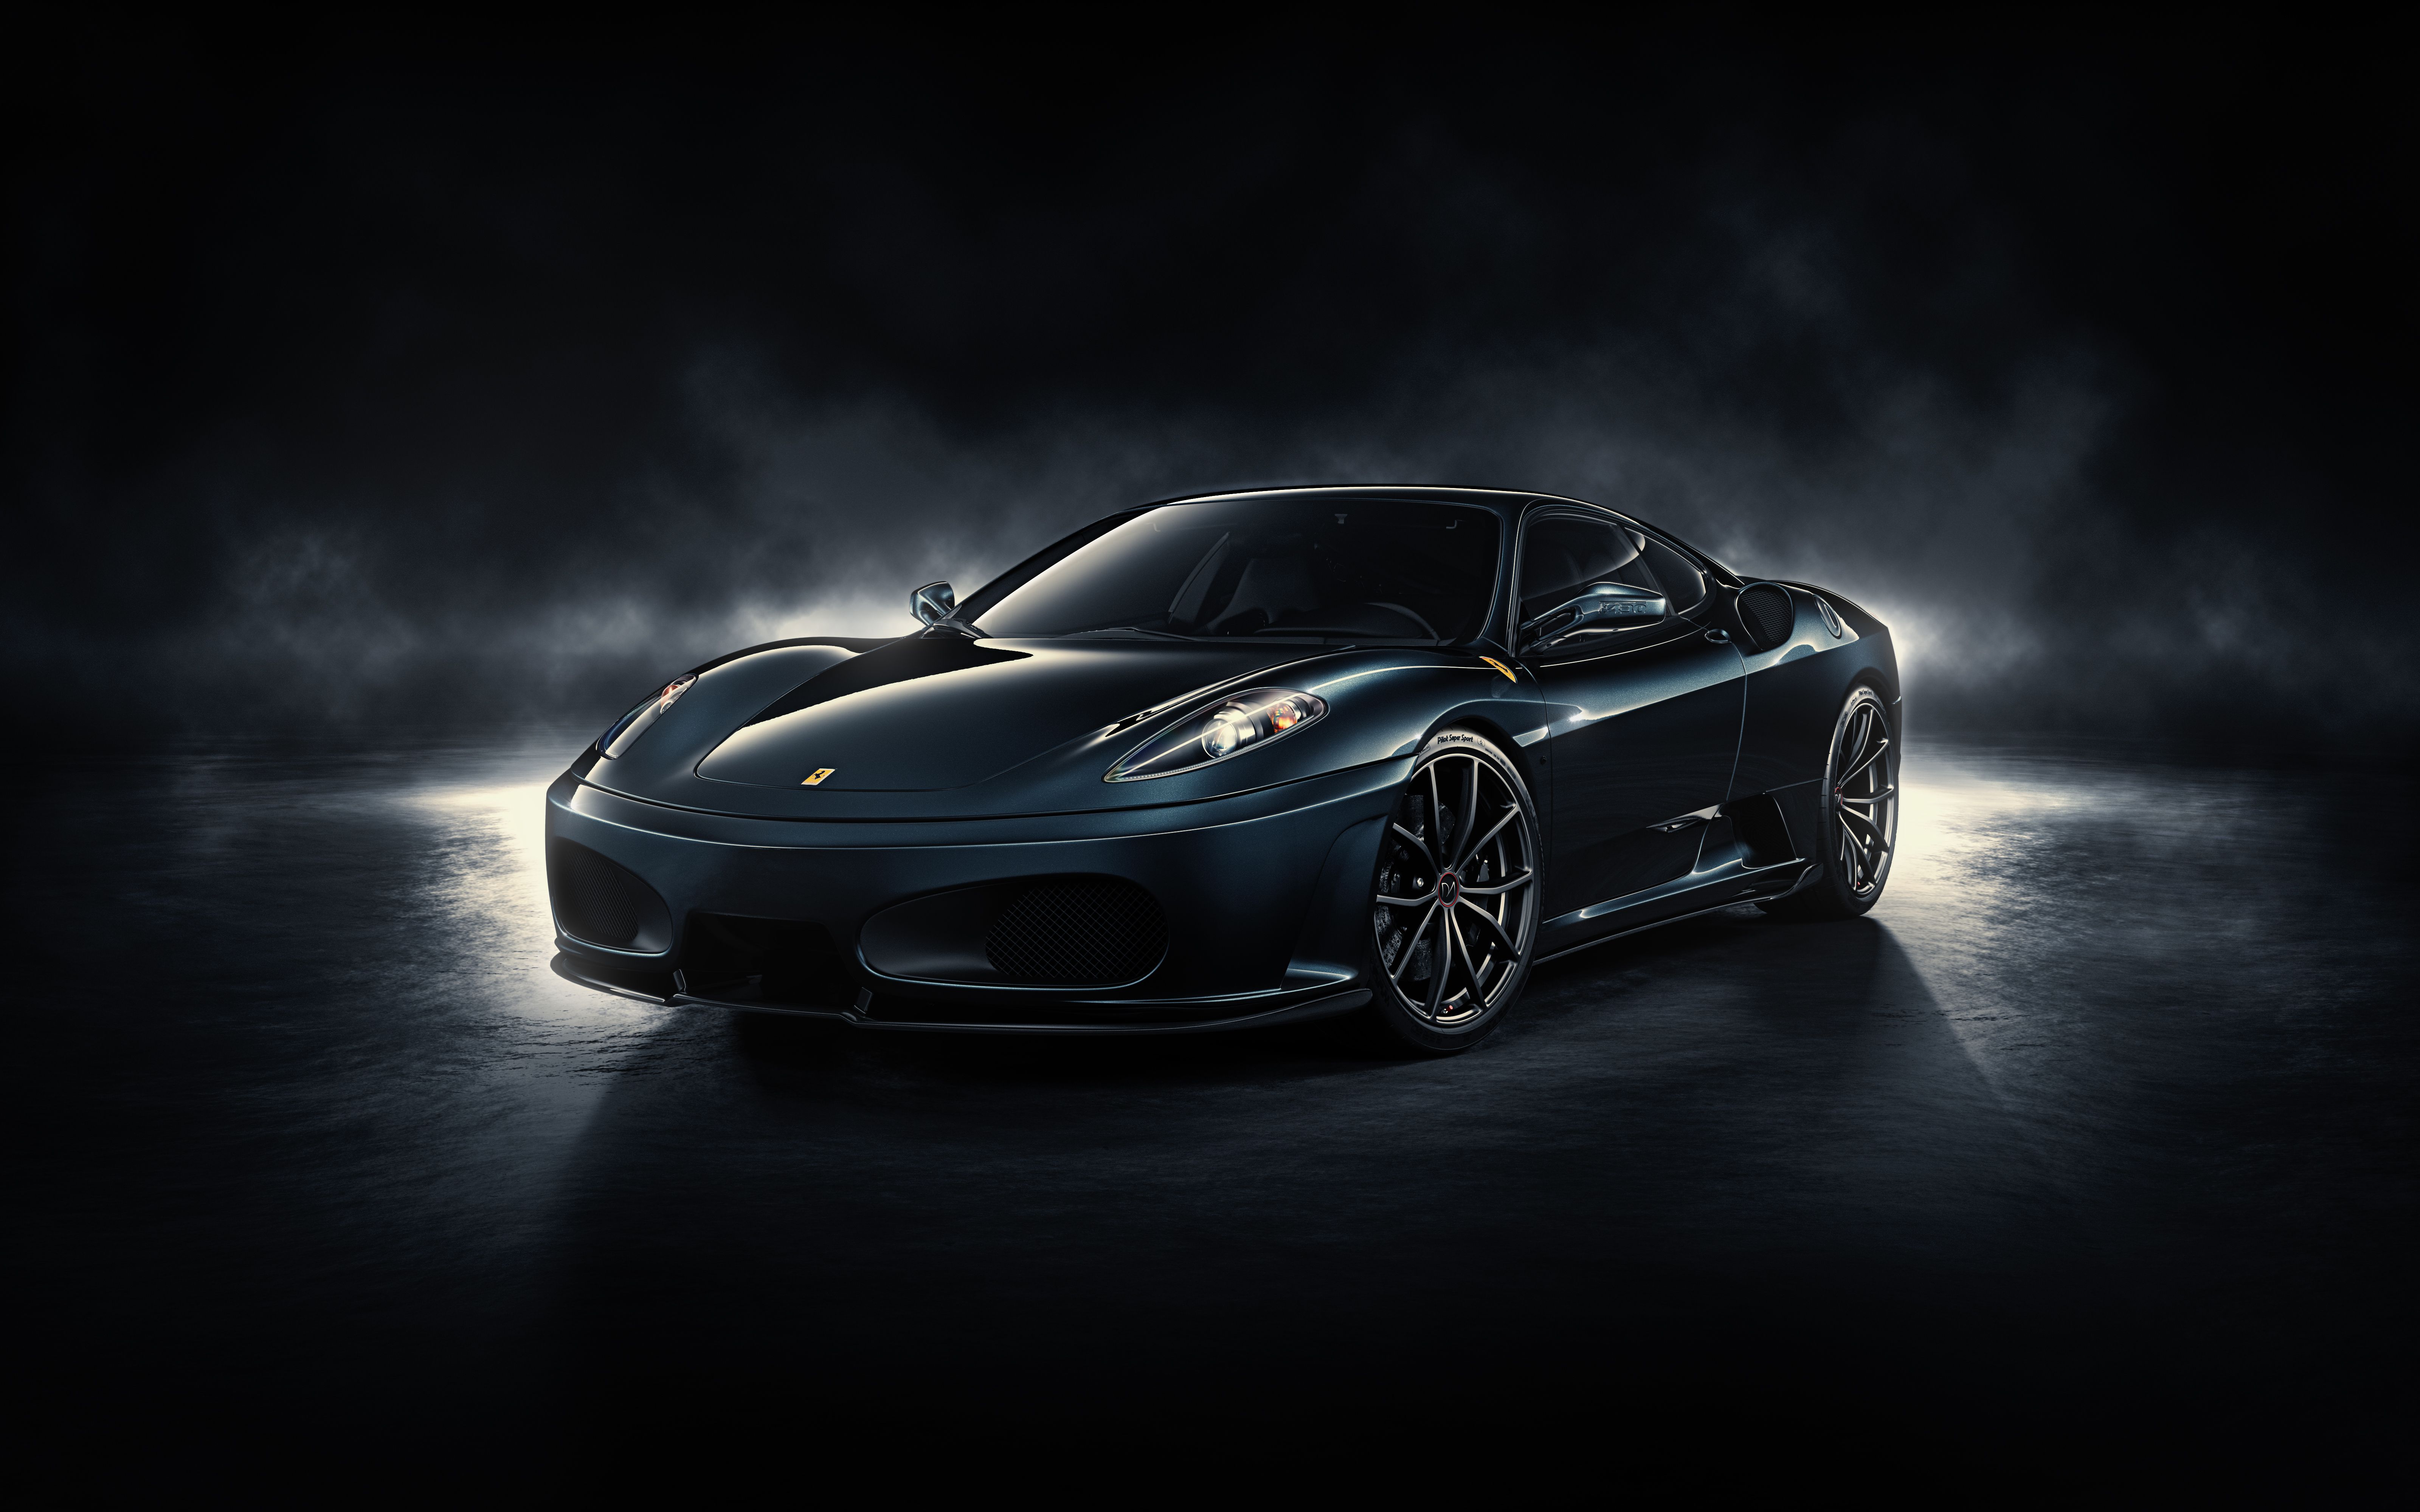 Black Ferrari F430 Wallpaper Image